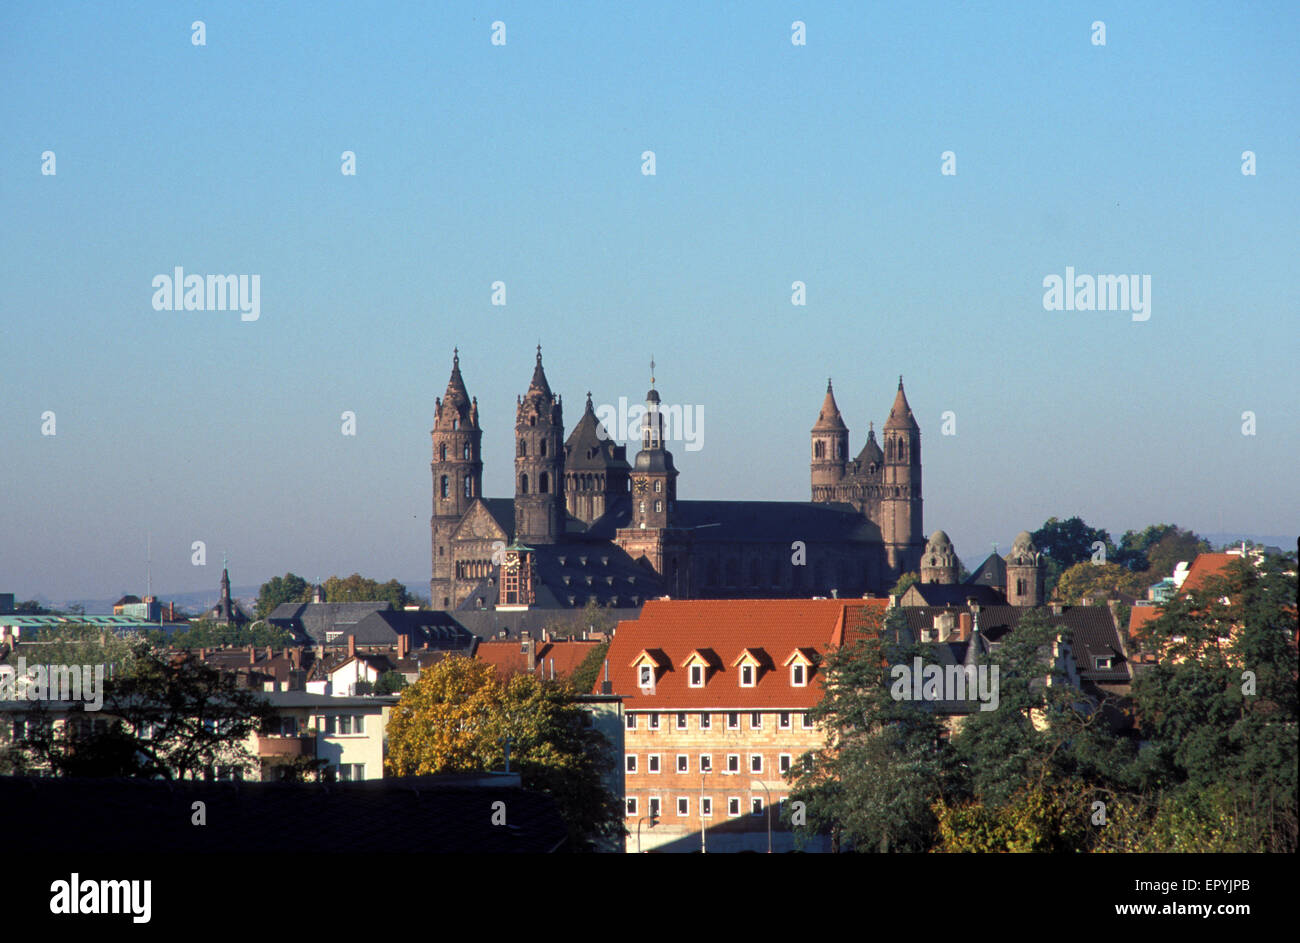 DEU, Germania, worm, la cattedrale. DEU, Deutschland, Worm, Der Dom. Foto Stock